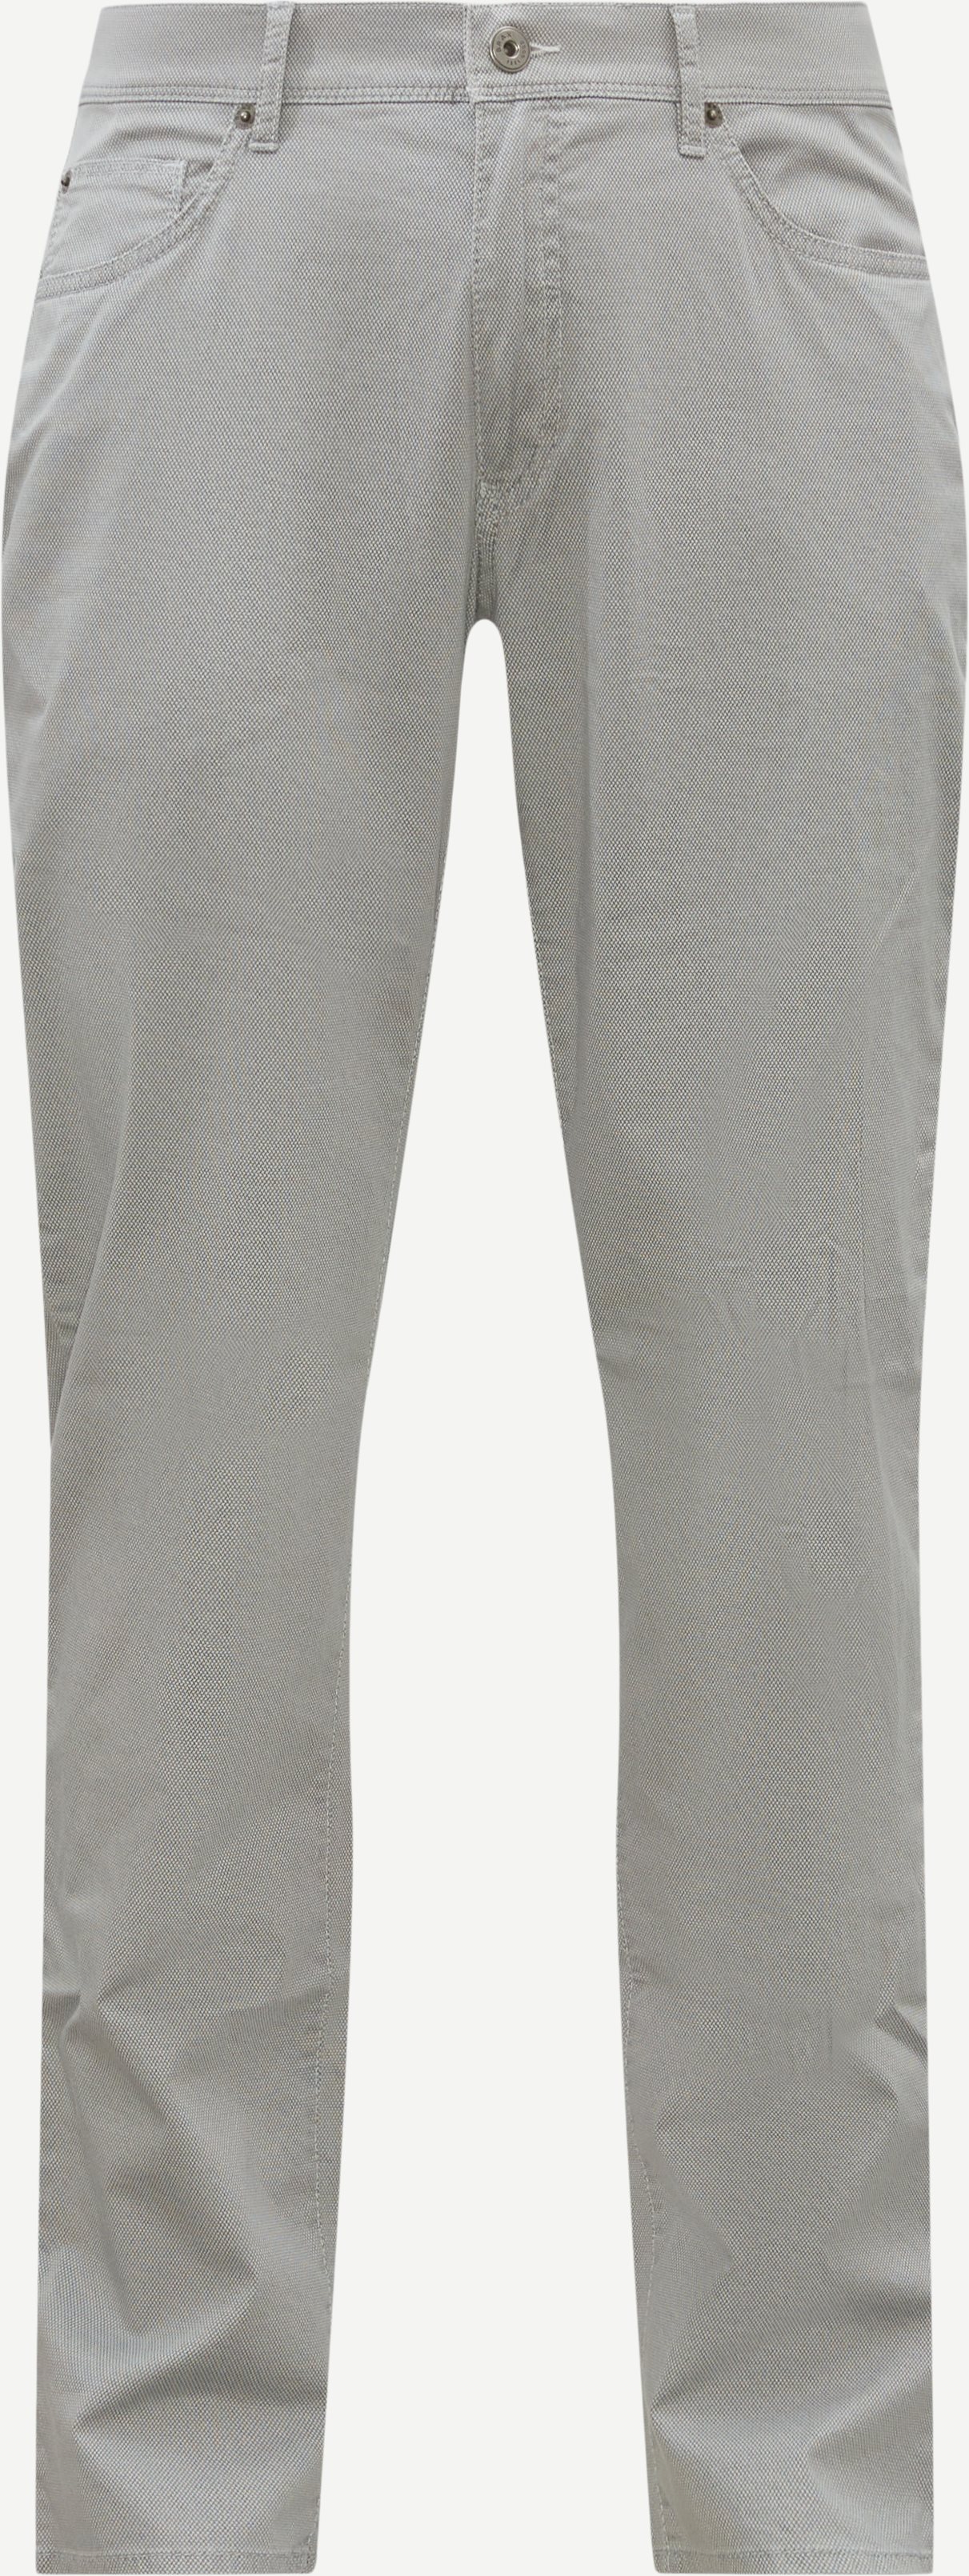 Brax Jeans 81-1858 CADIZ Grey